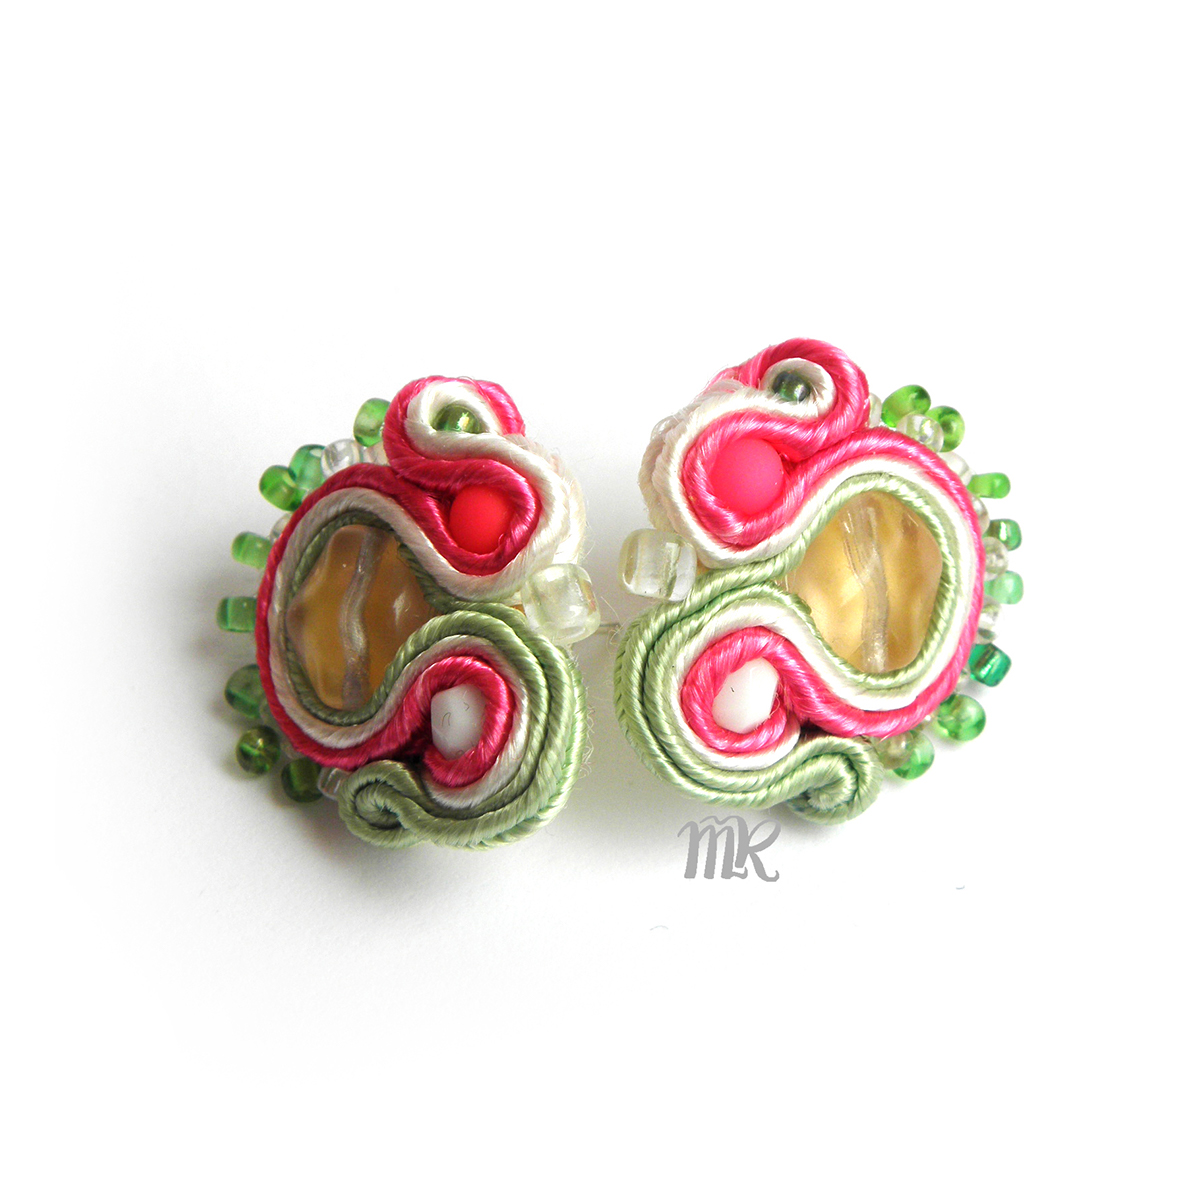 spring soutache earrings green White pink